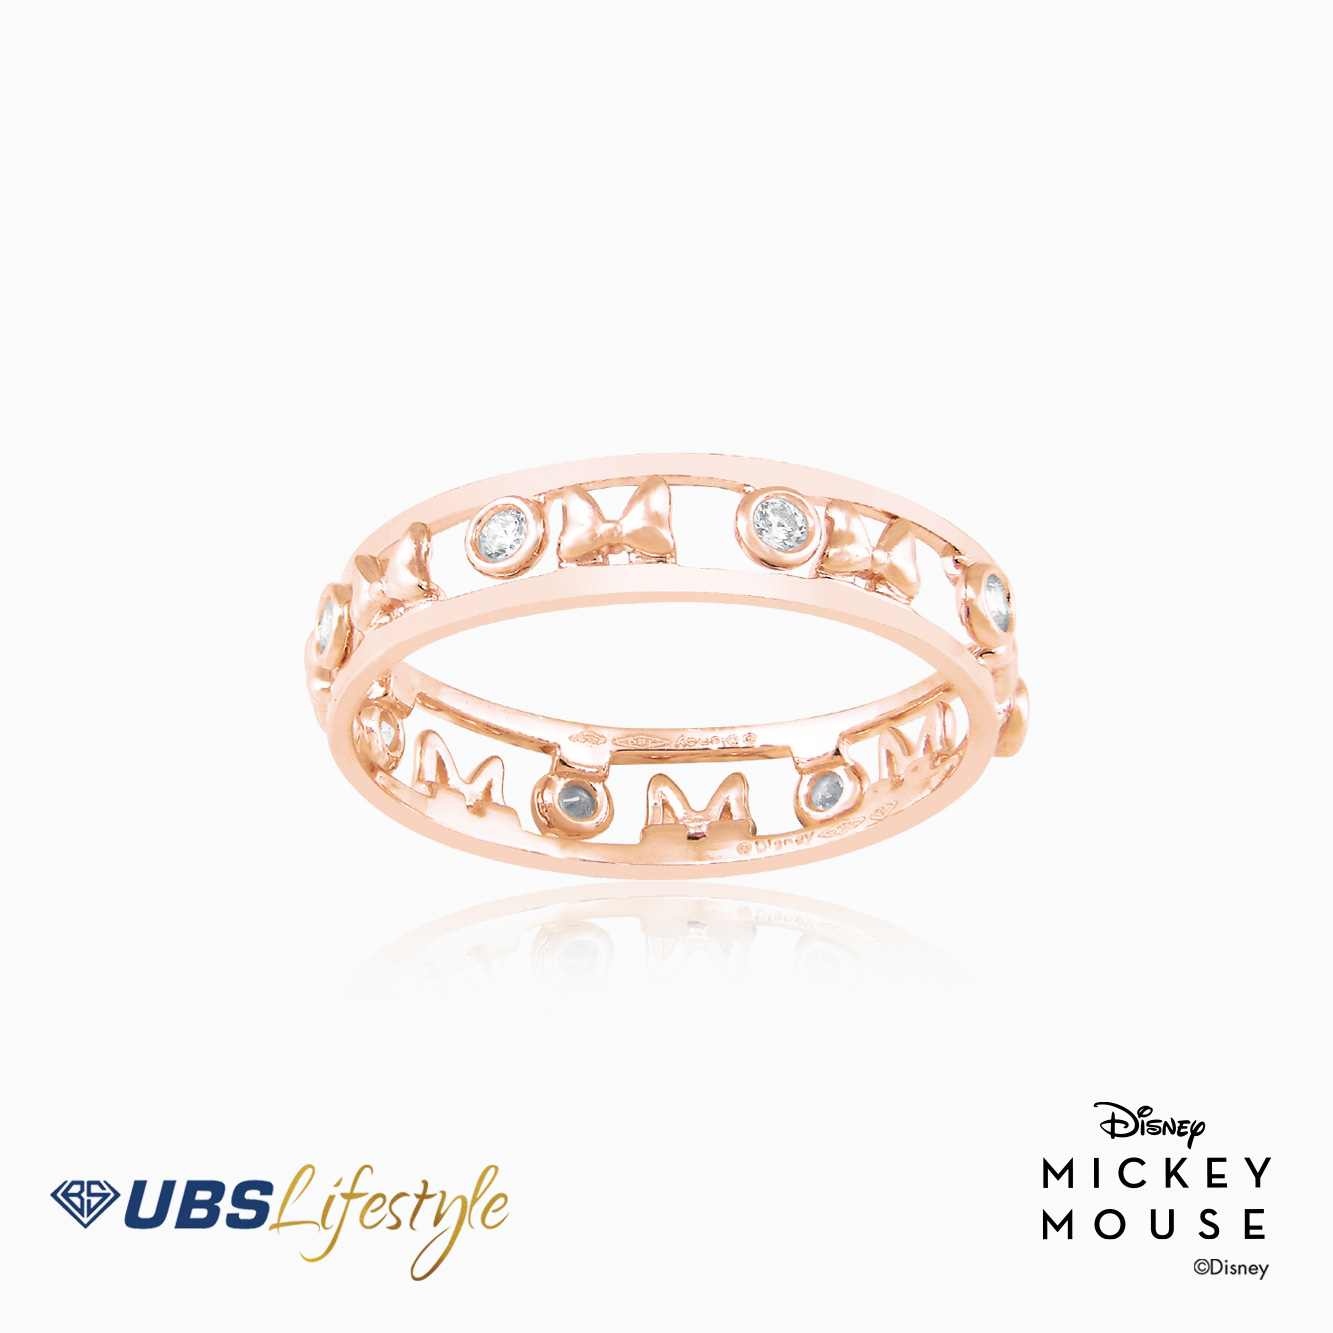 UBS Cincin Emas Disney Minnie Mouse - Ccy0112 - 17K